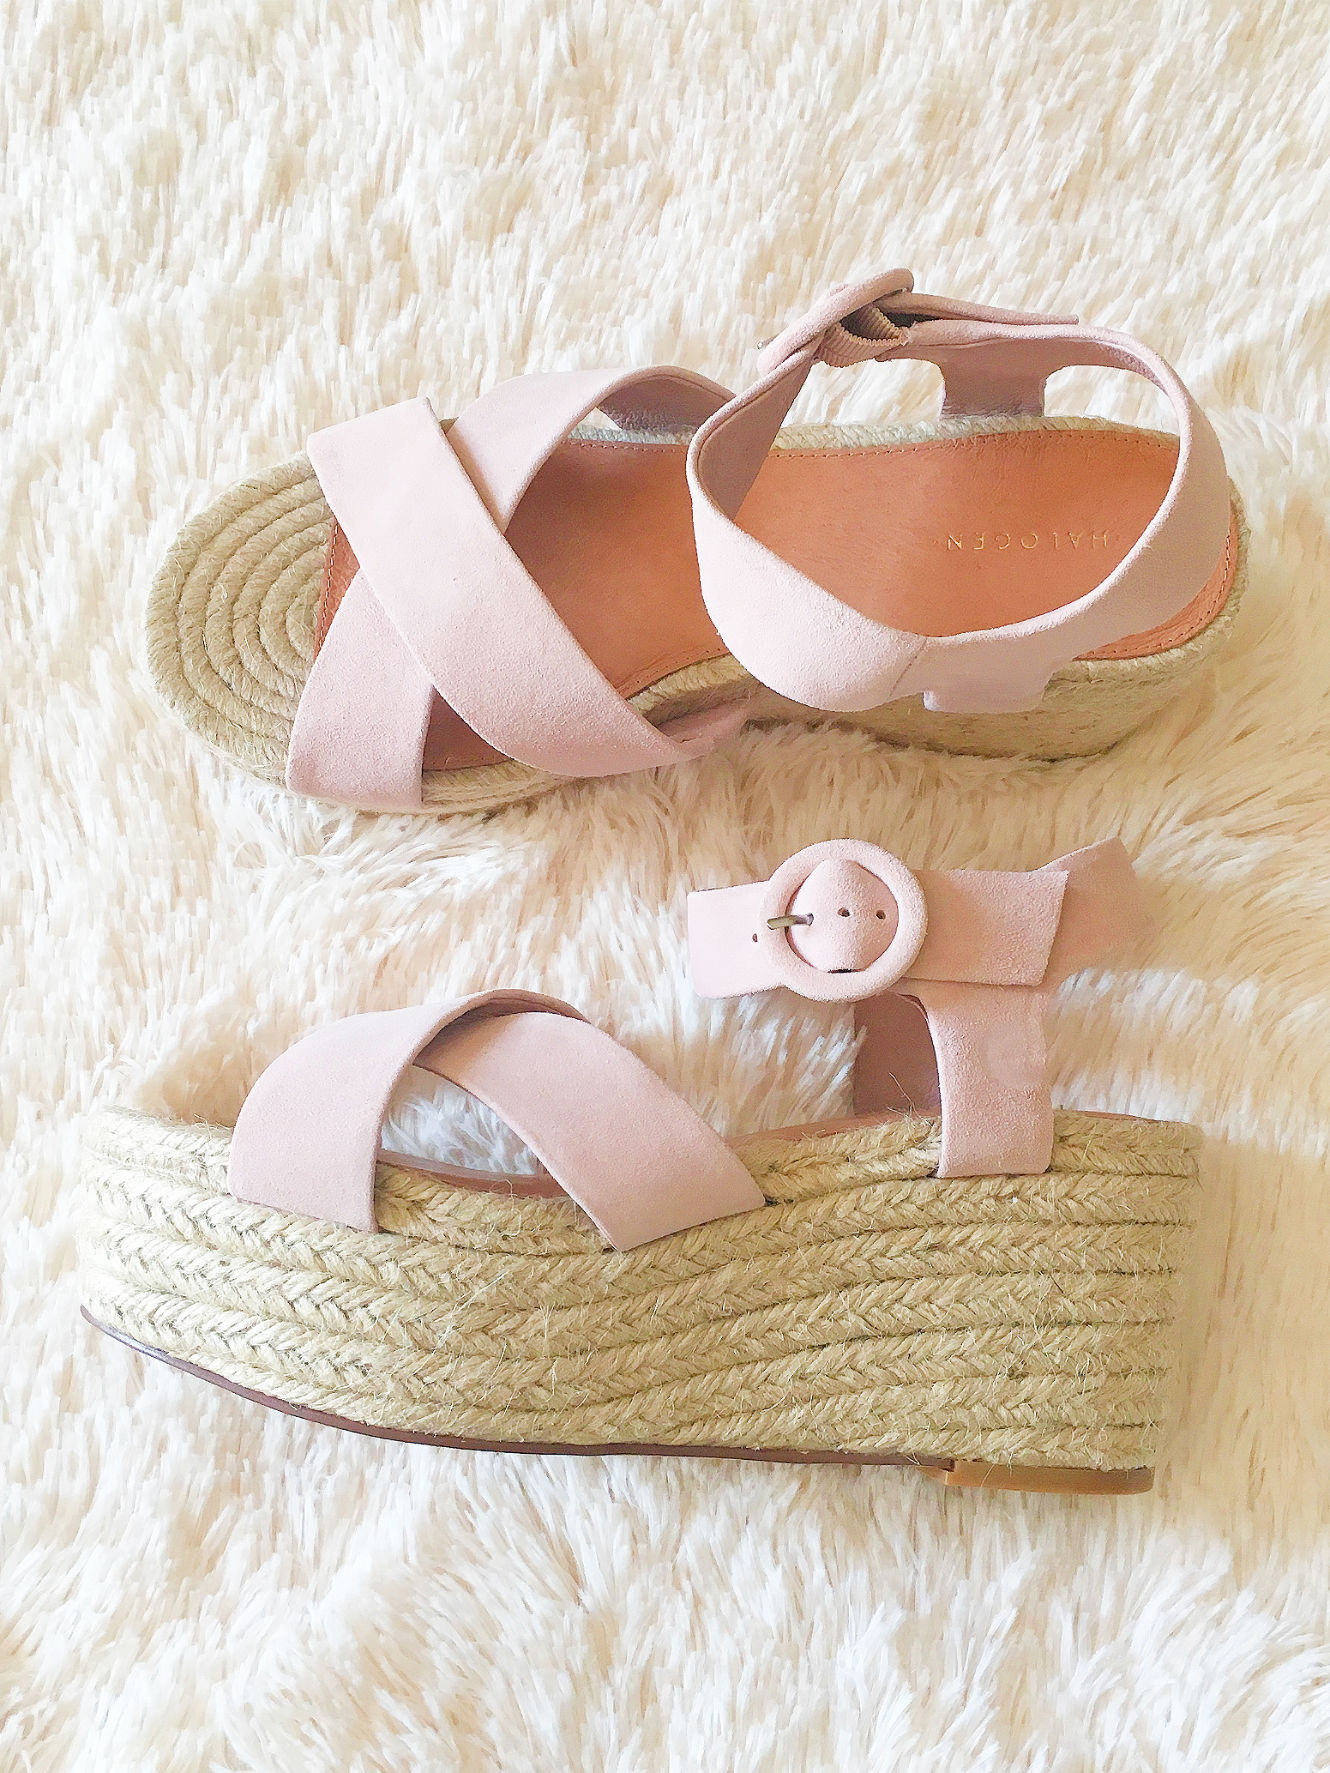 Spring Sandals/Spring Fashion #blushsandals #springfashion #springfashionover40